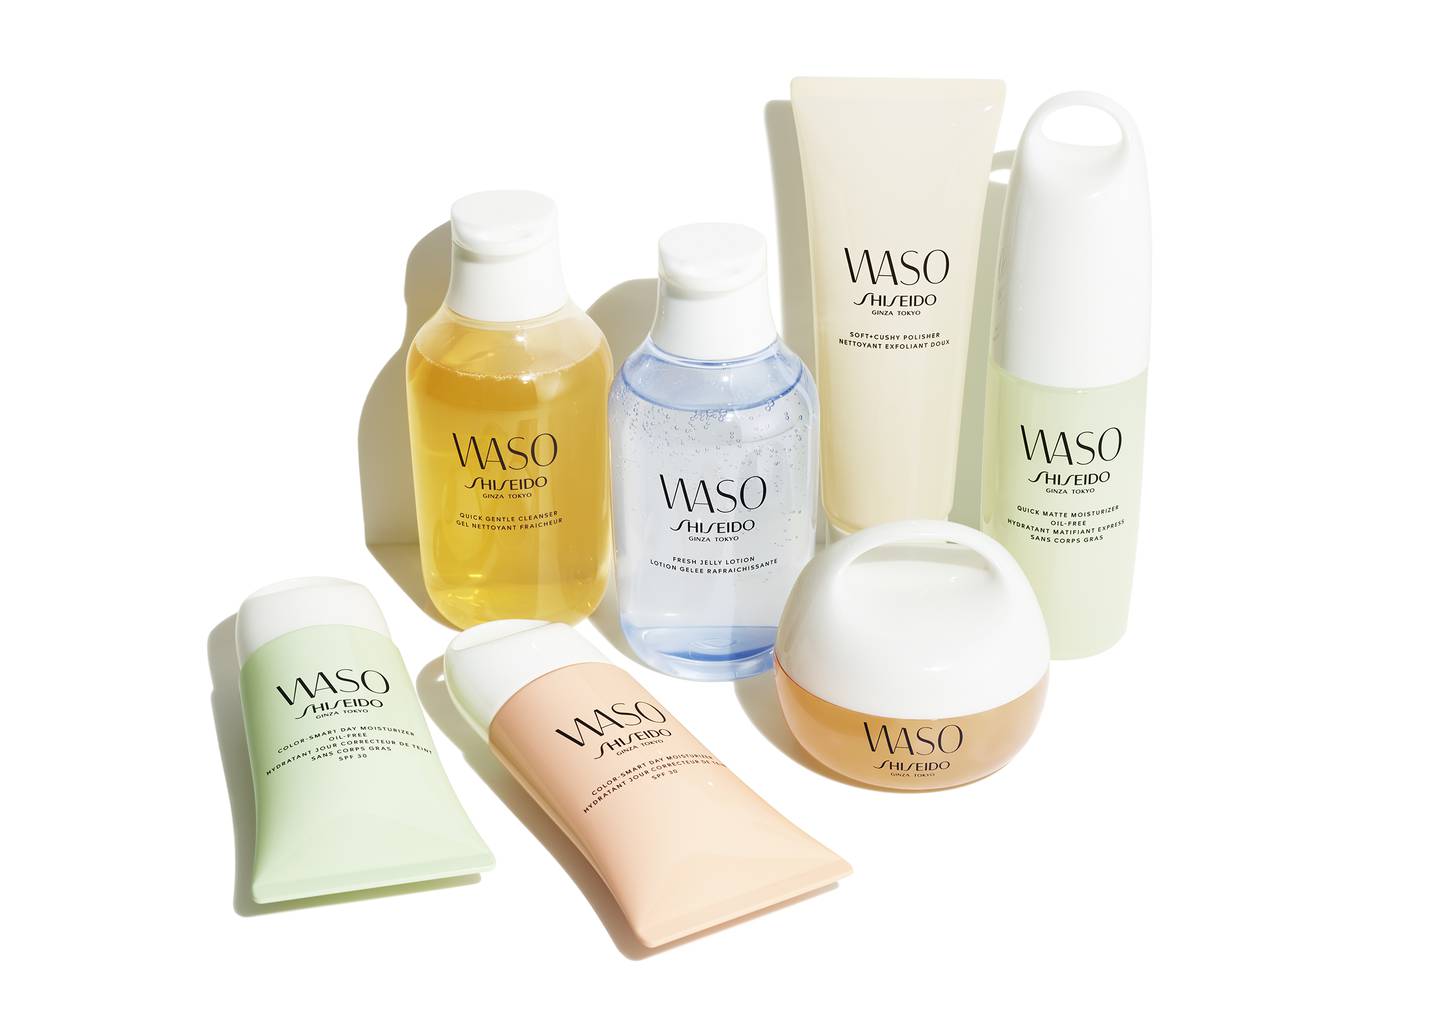 Waso products. Shiseido